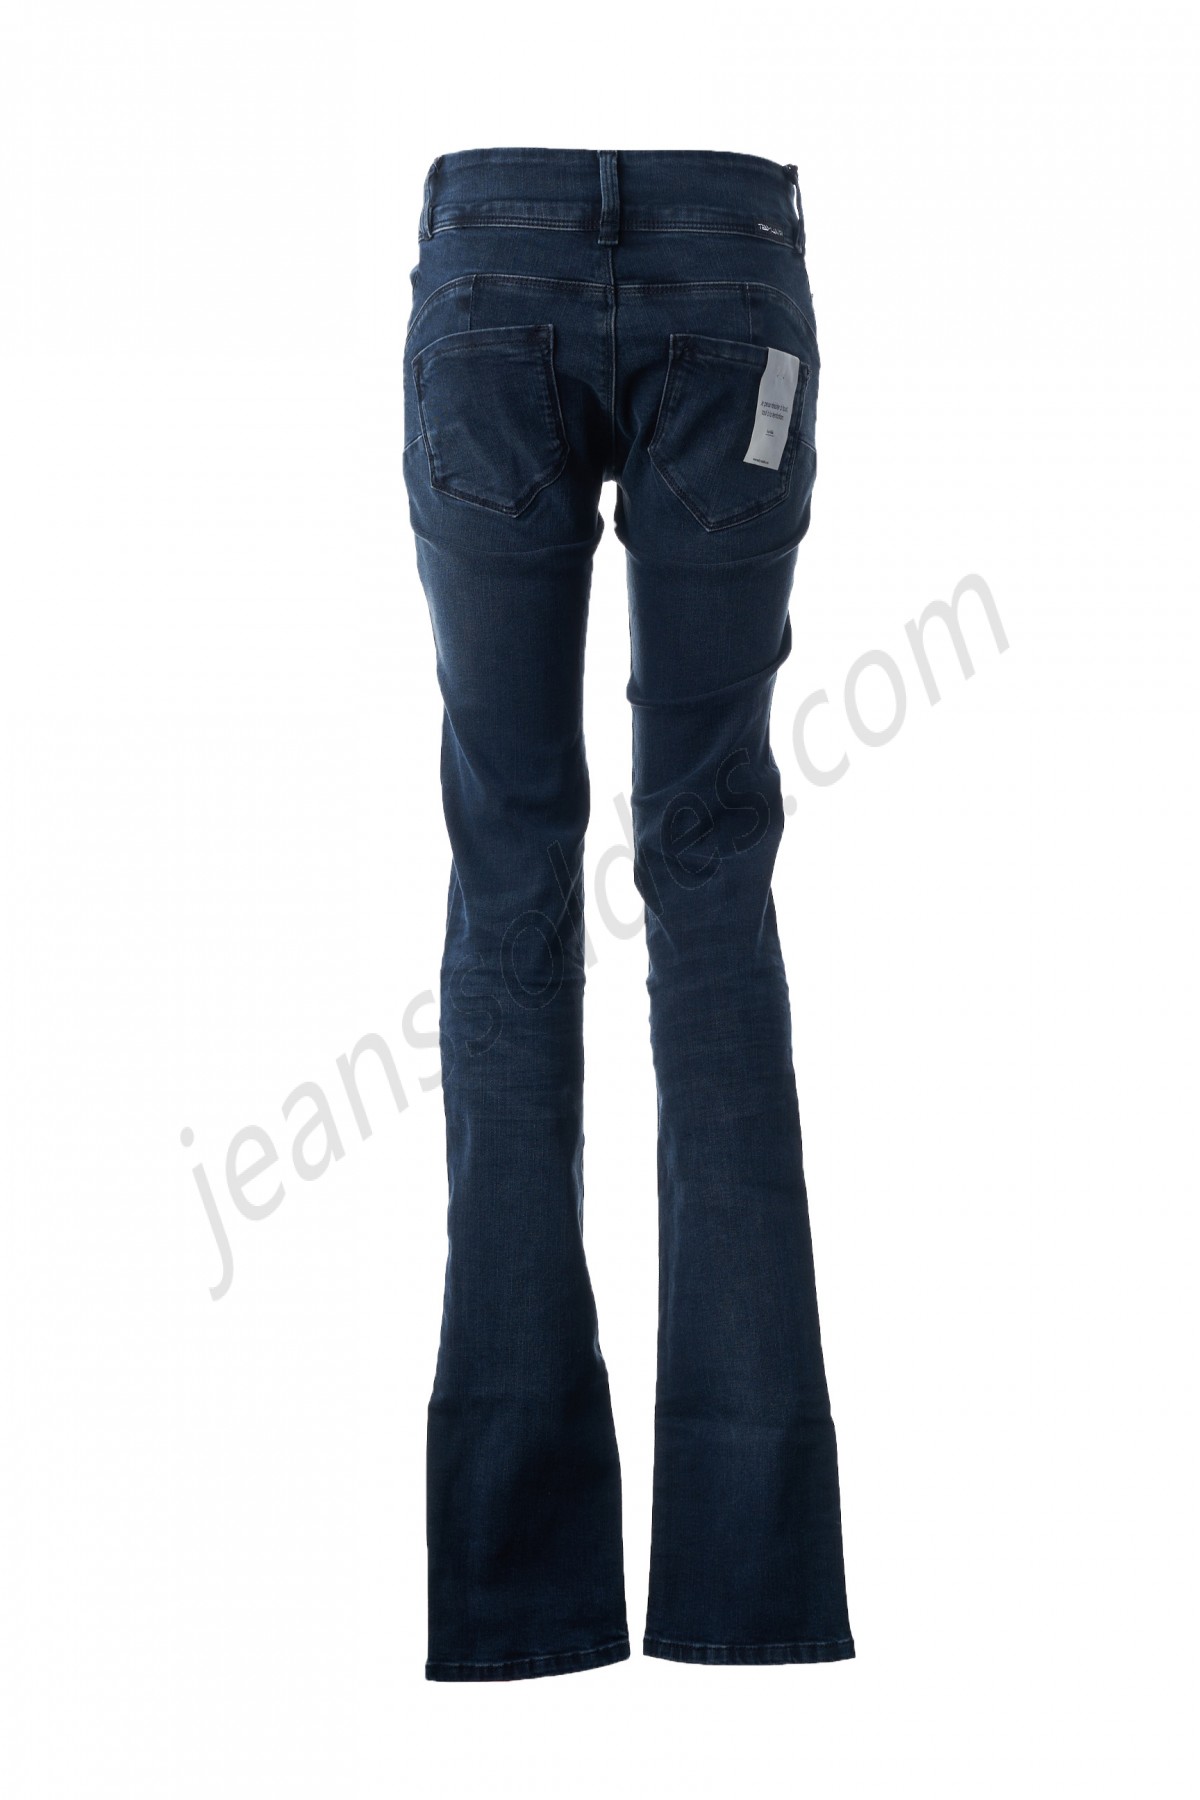 teddy smith-Jeans coupe slim prix d’amis - -1